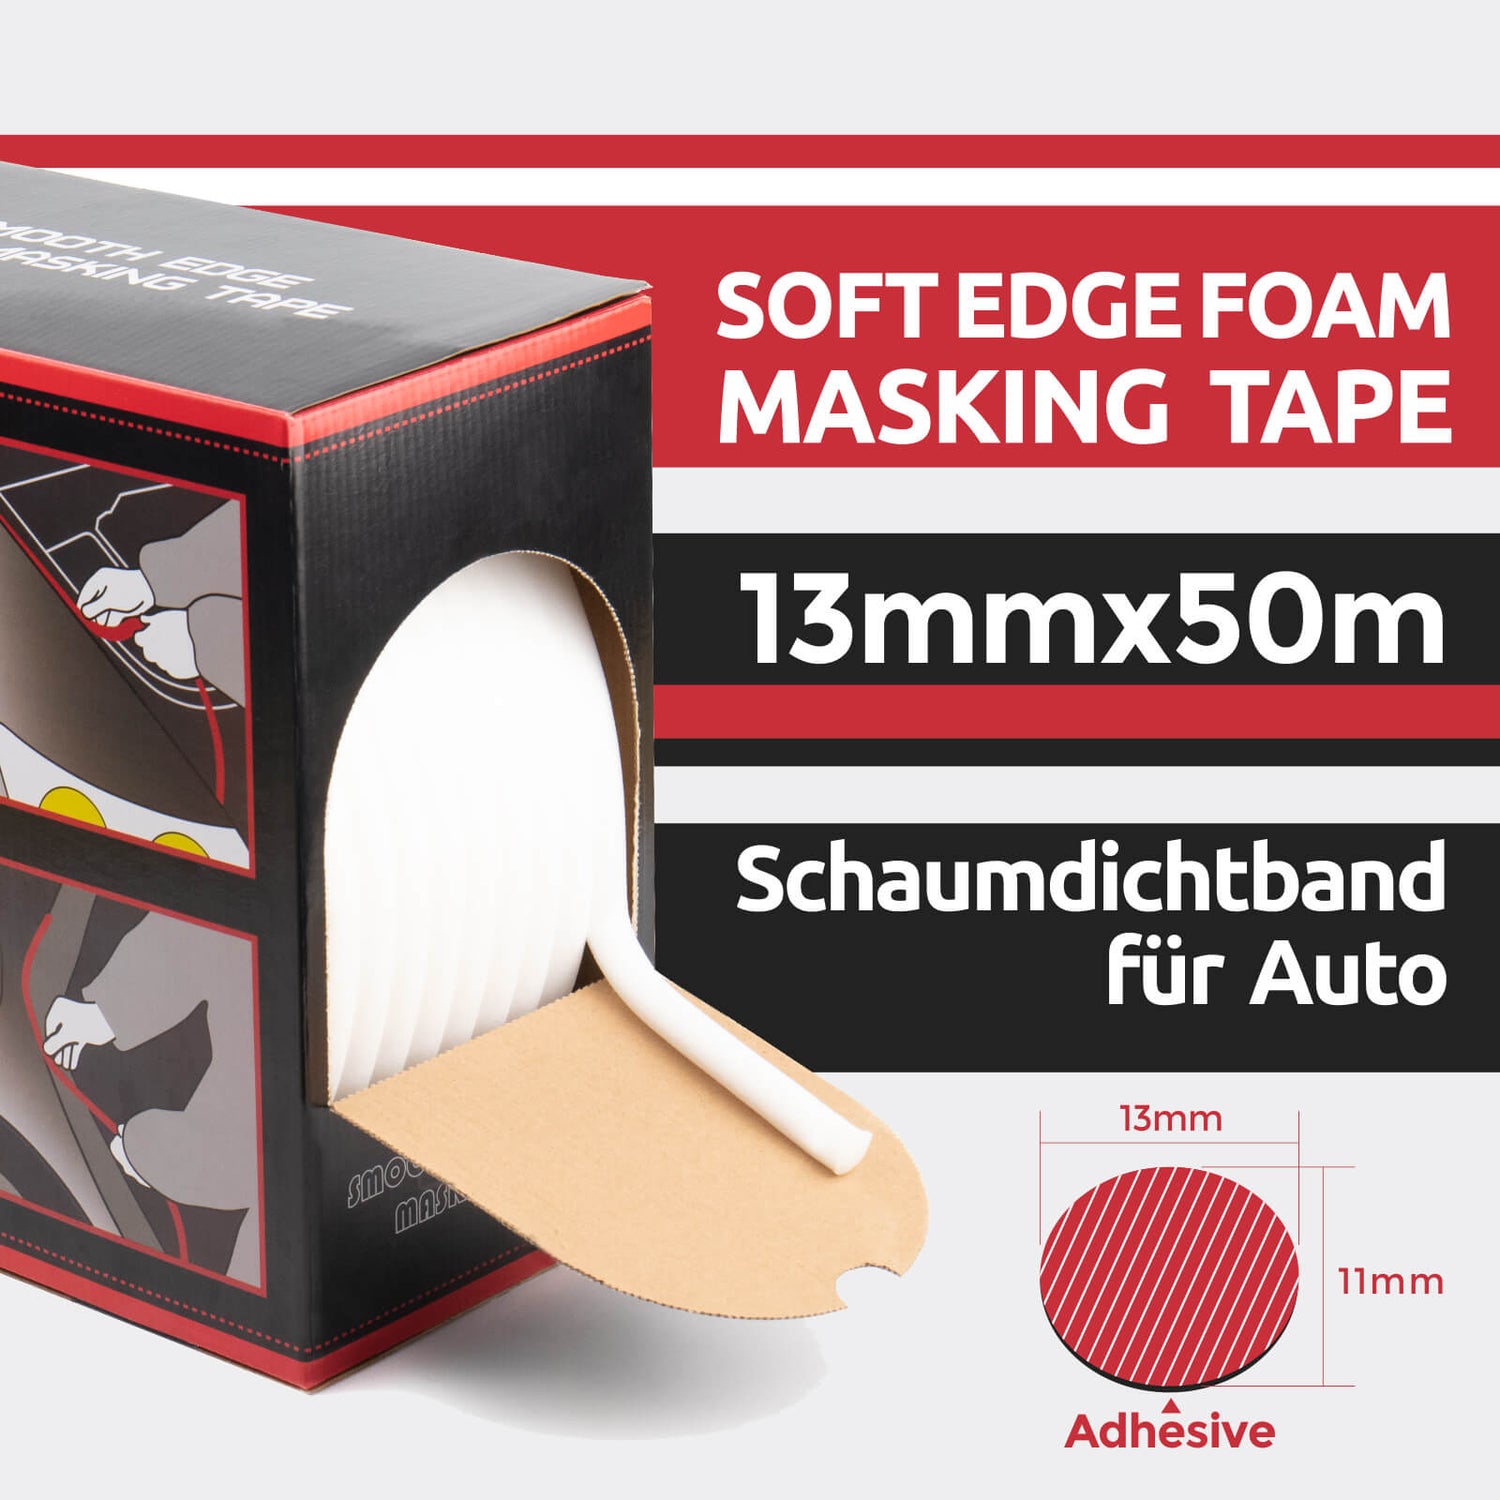 Fastplus Schaumdichtband Abklebeband selbstklebendes soft edge foam masking tape 13mmx50m